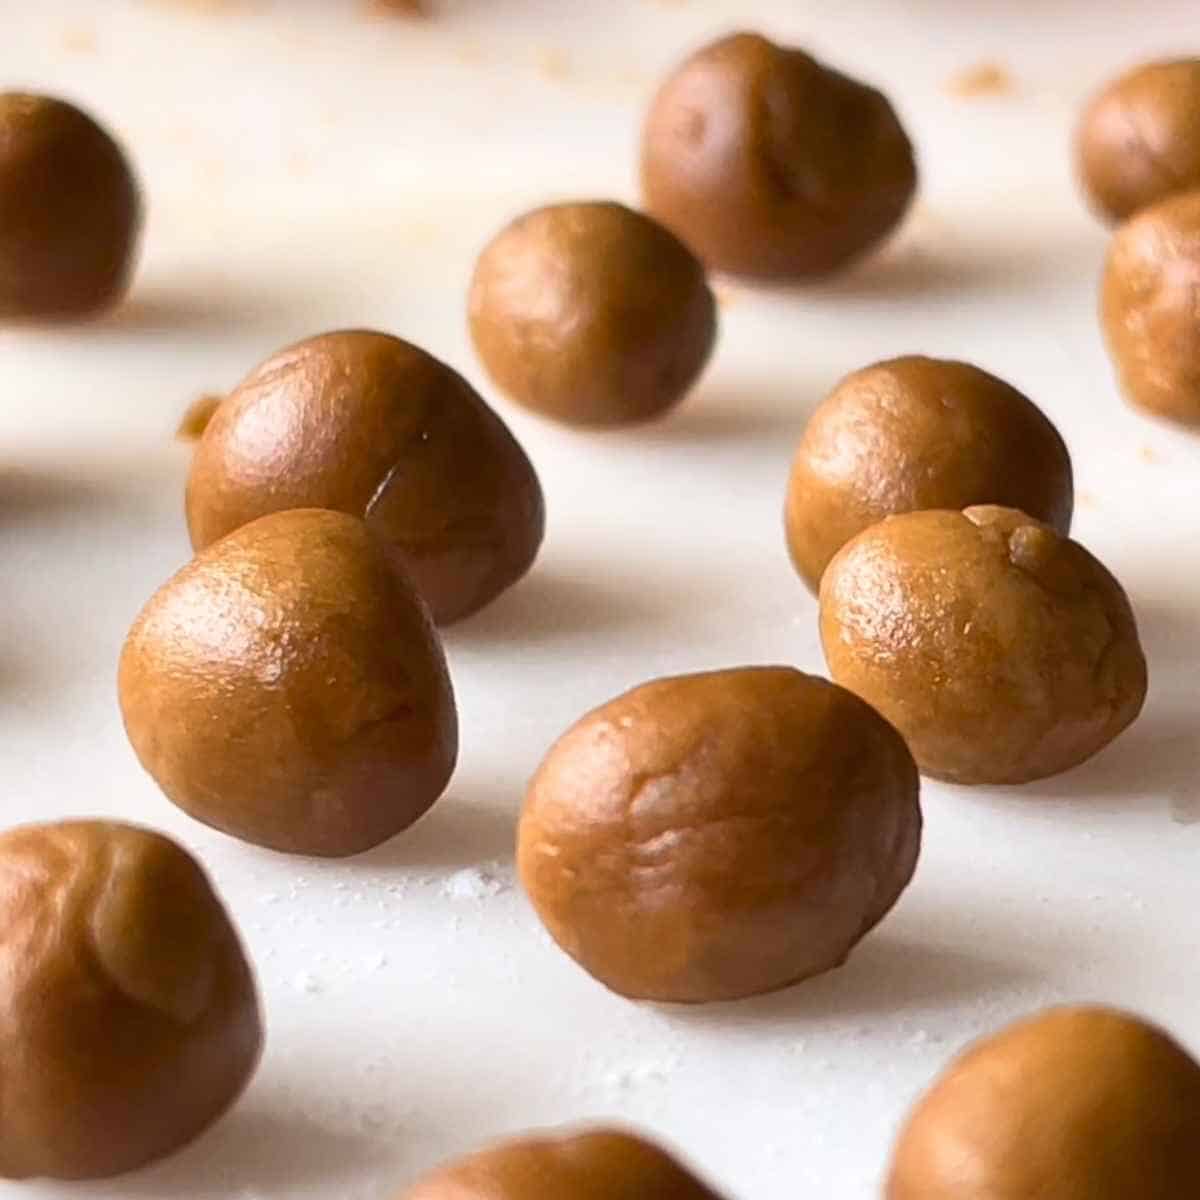 Size of dough balls